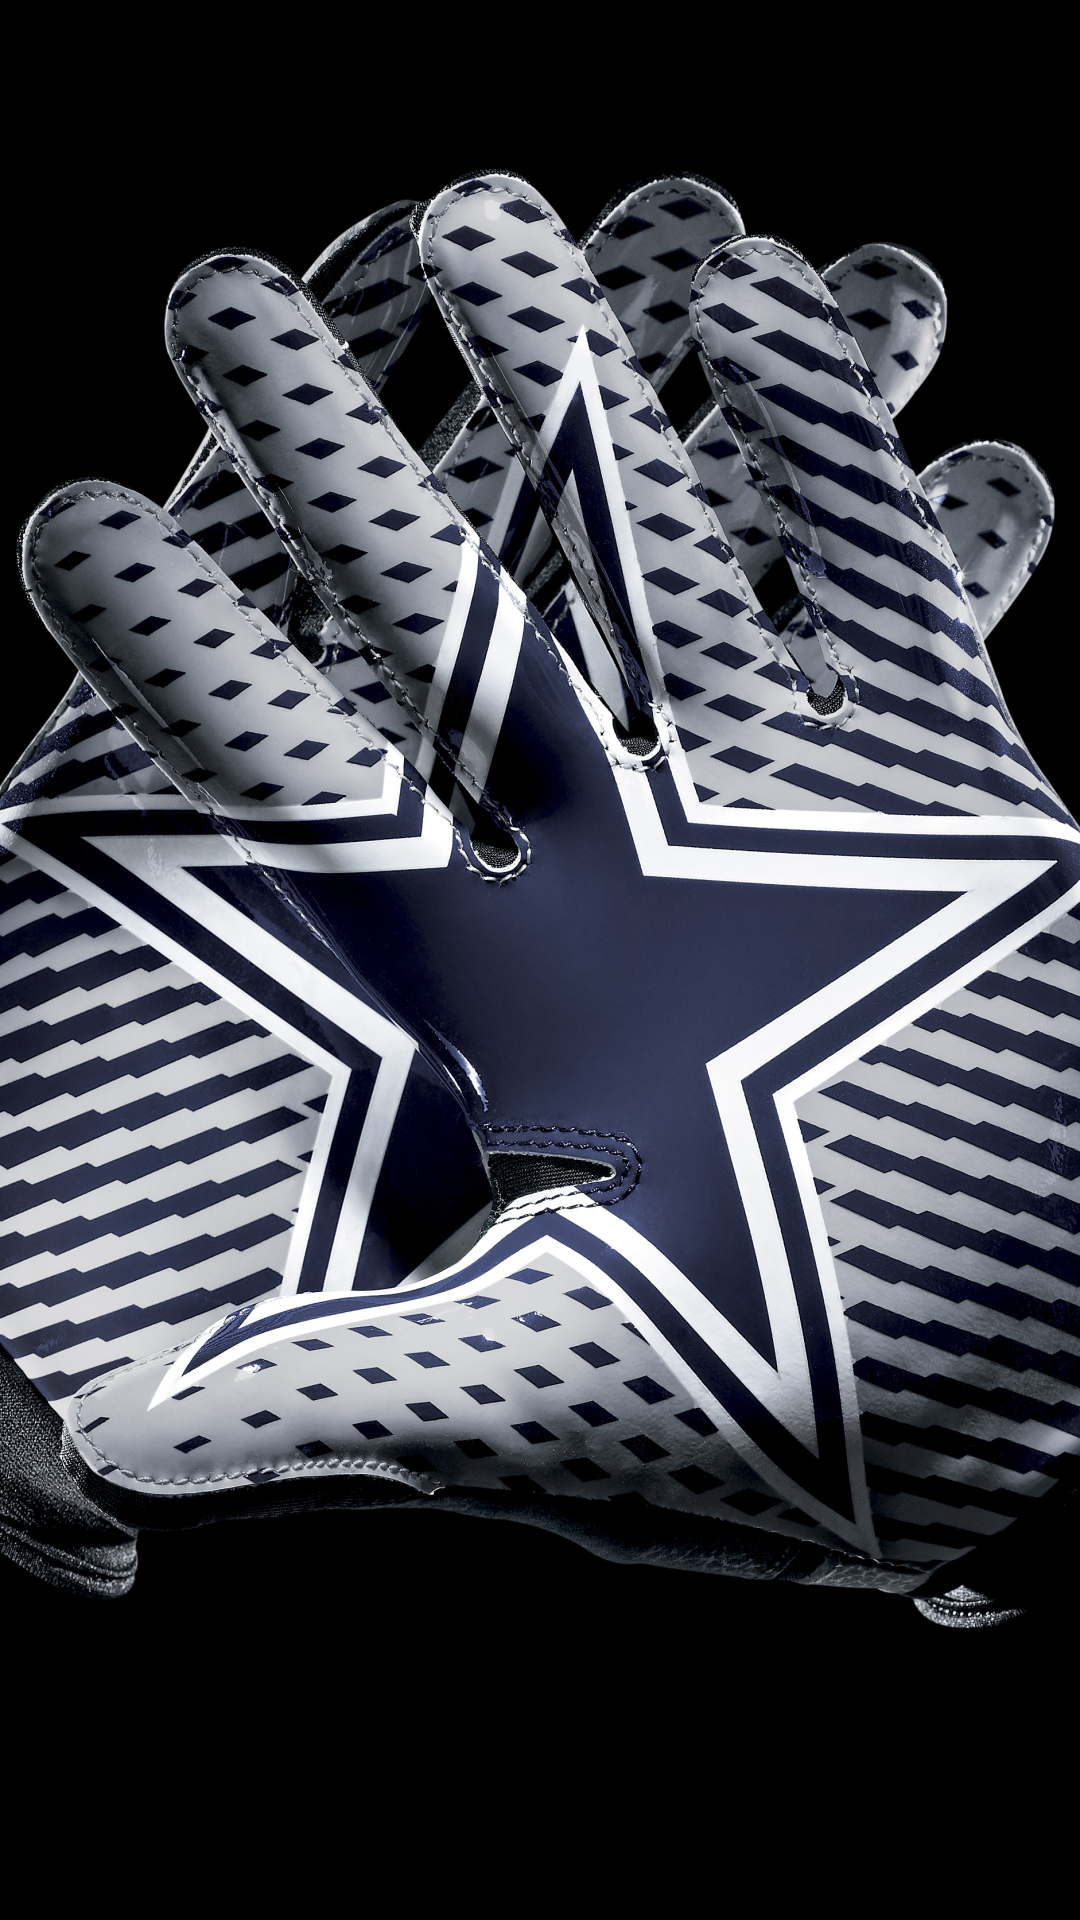 Dallas Cowboys Phone Wallpaper - Mobile